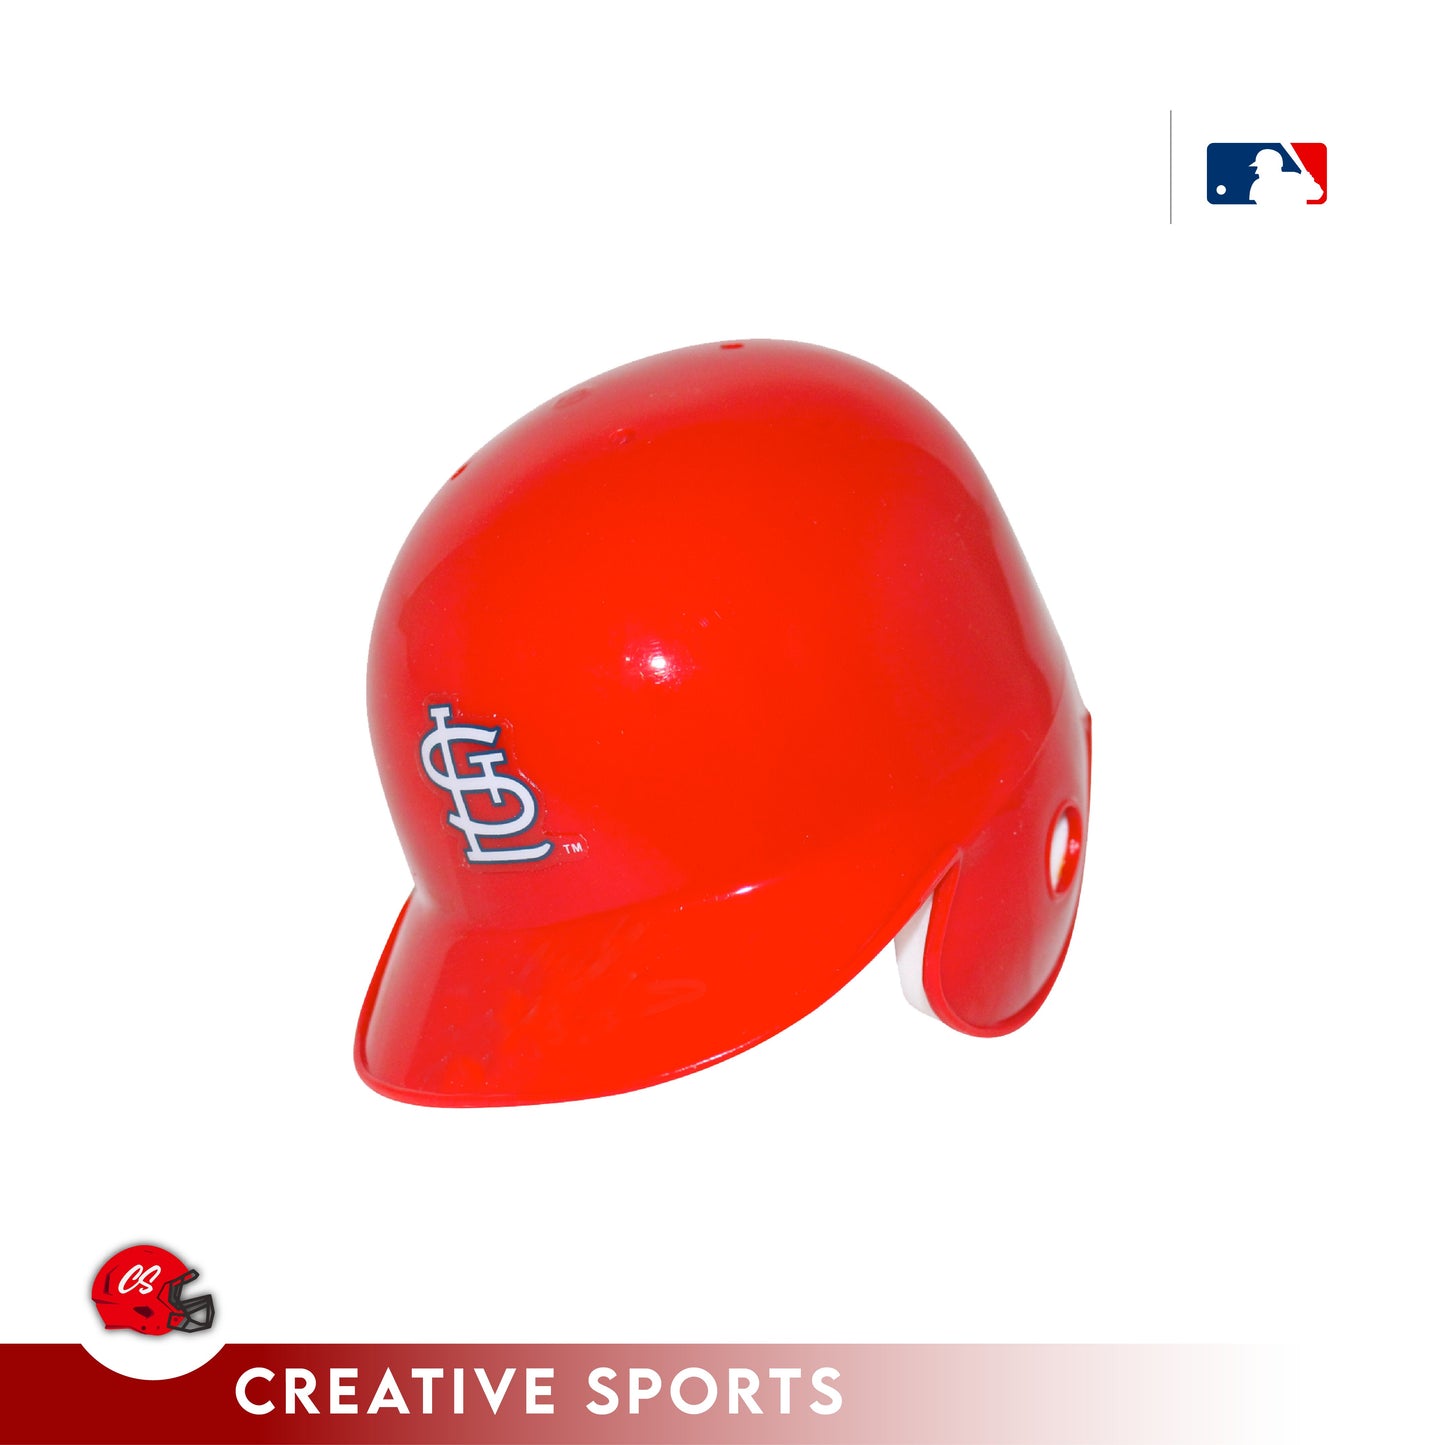 St. Louis Cardinals Mini Baseball Batting Helmet - with display stand